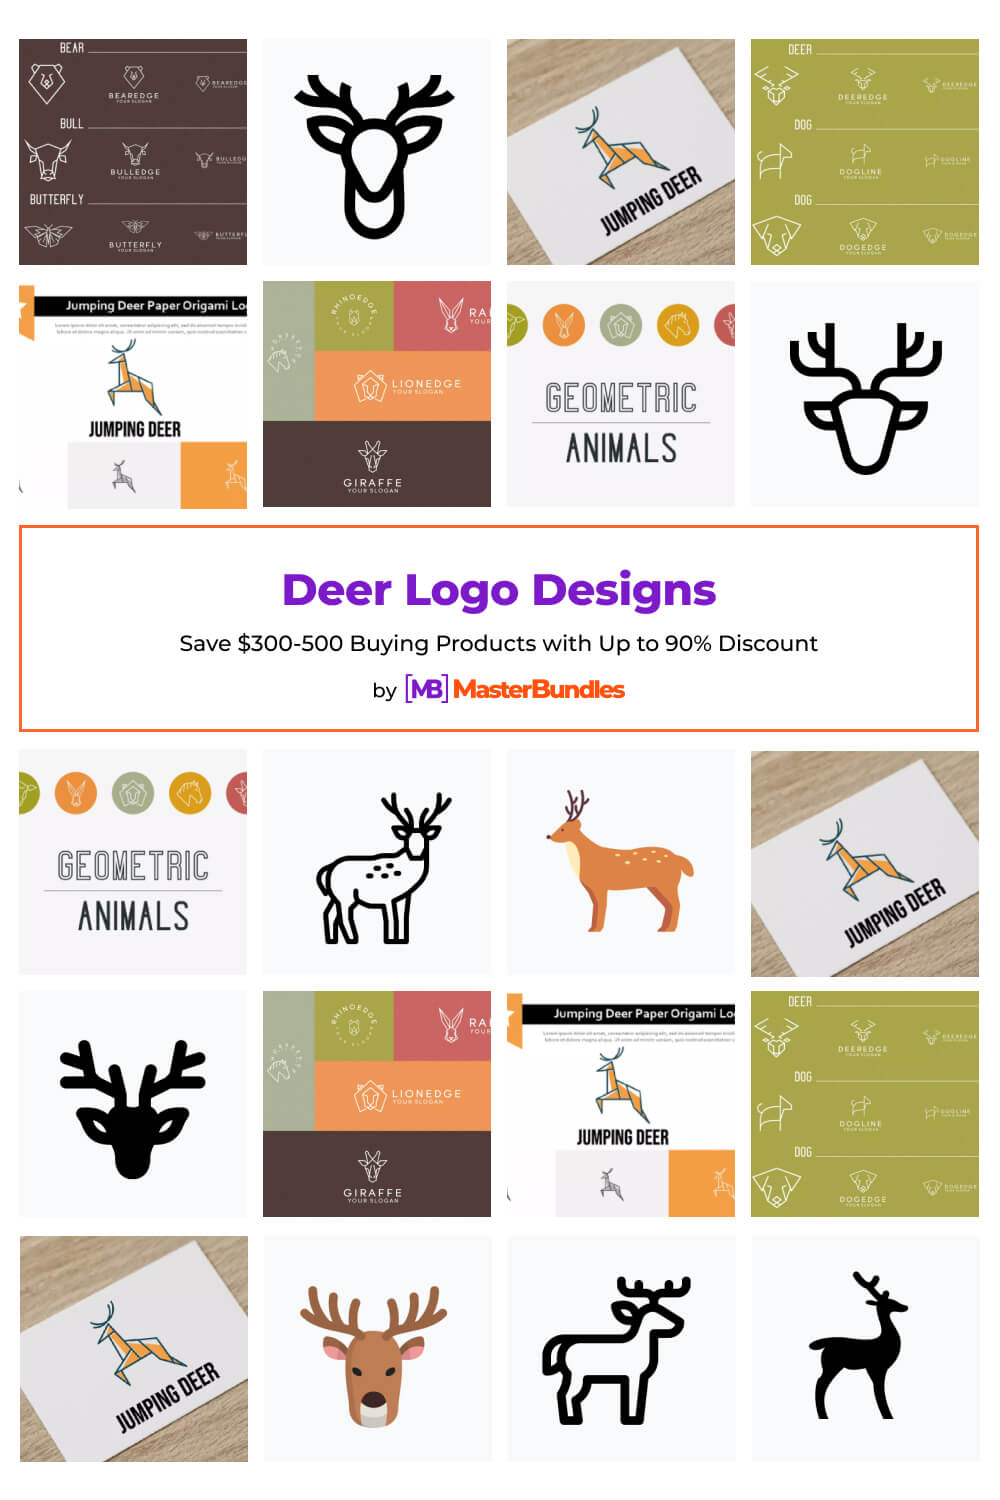 deer logo designs pinterest image.